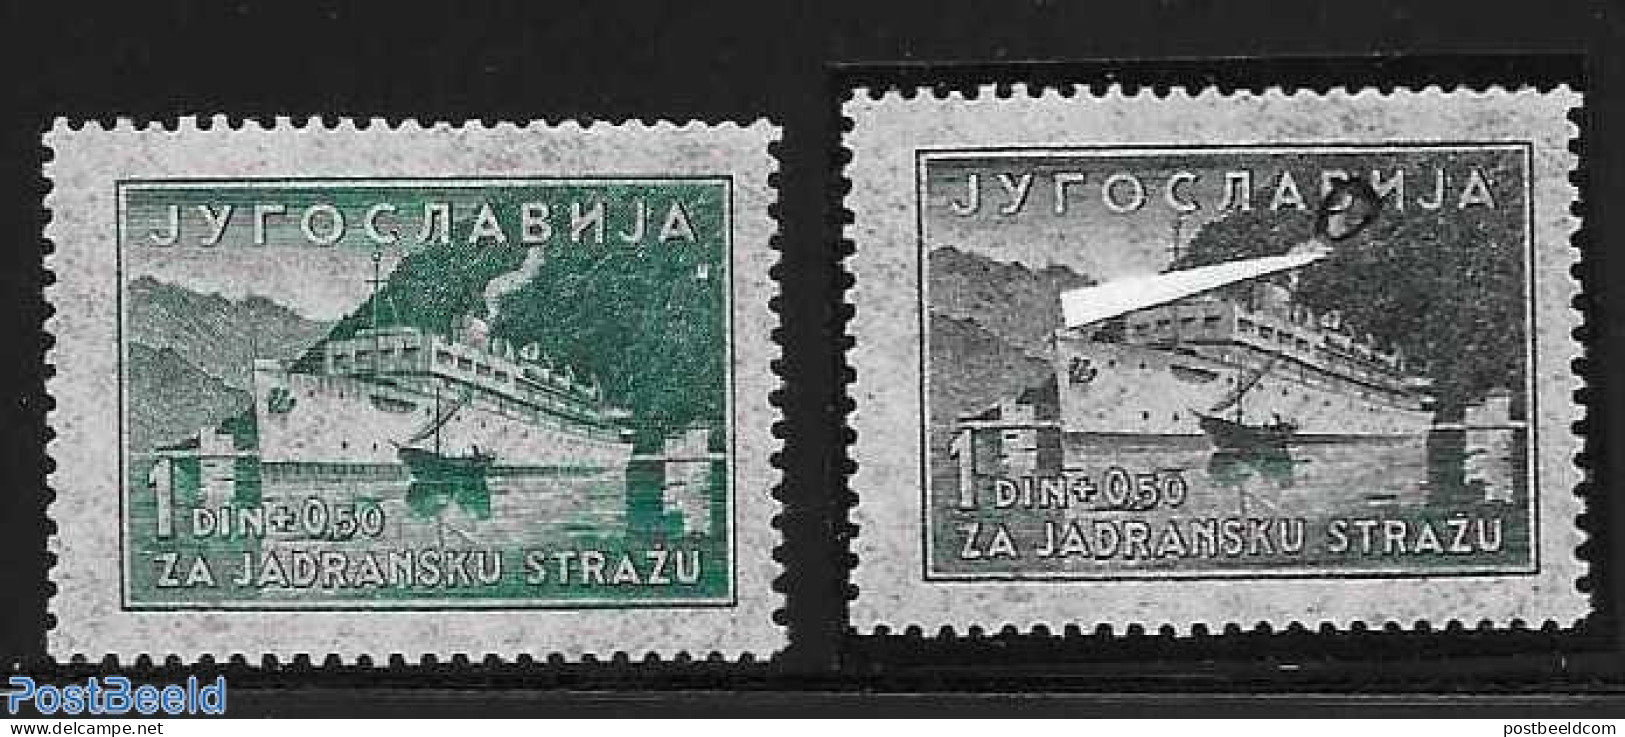 Yugoslavia 1939 Ships, Mint NH, Transport - Ships And Boats - Ongebruikt